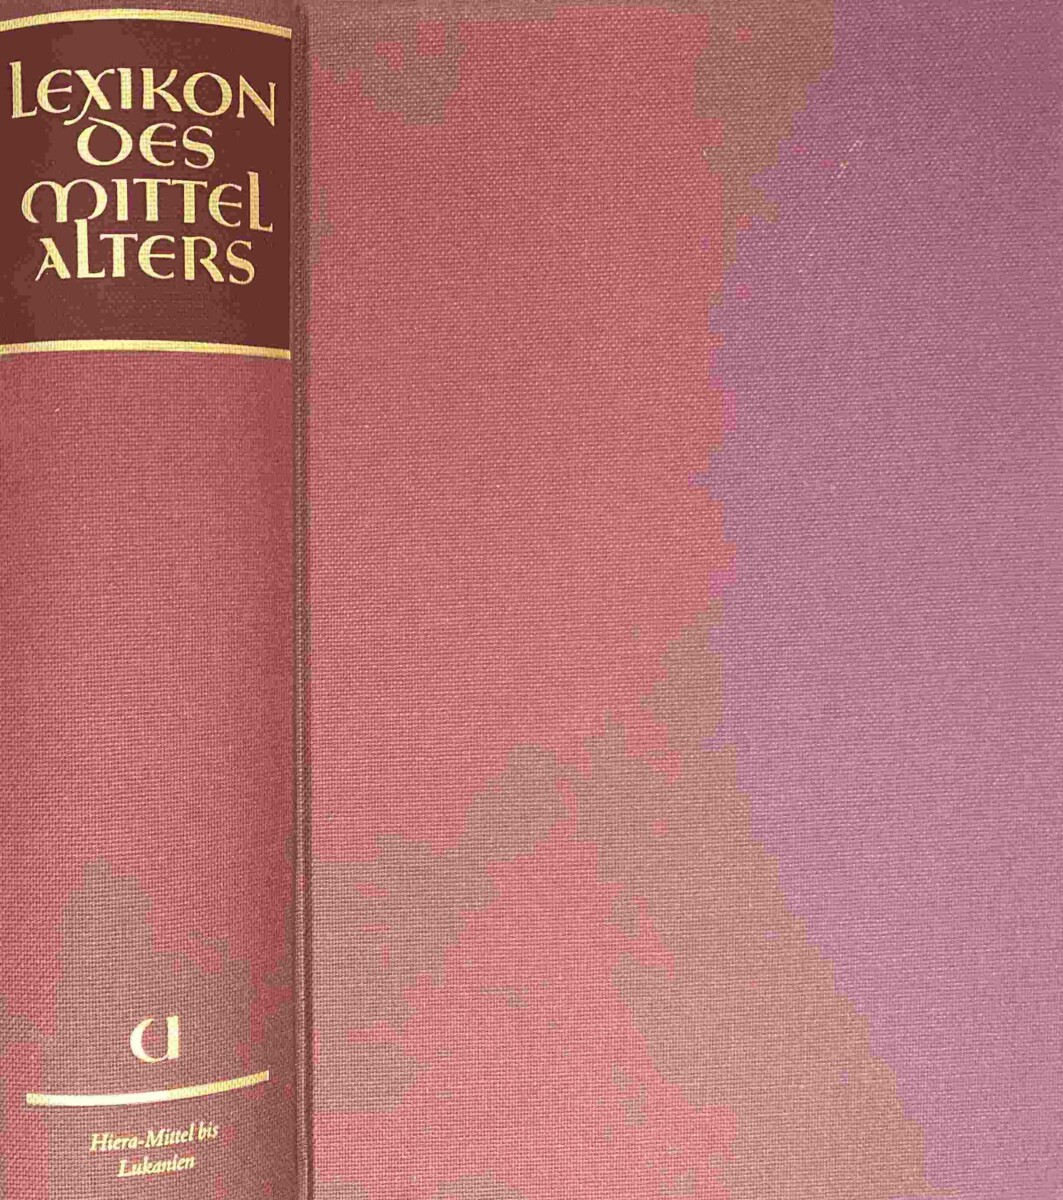 Lexikon des Mittelalters V: Hiera-Mittel bis Lukanien - Bautier, Robert-Henri a.o. (ed.)